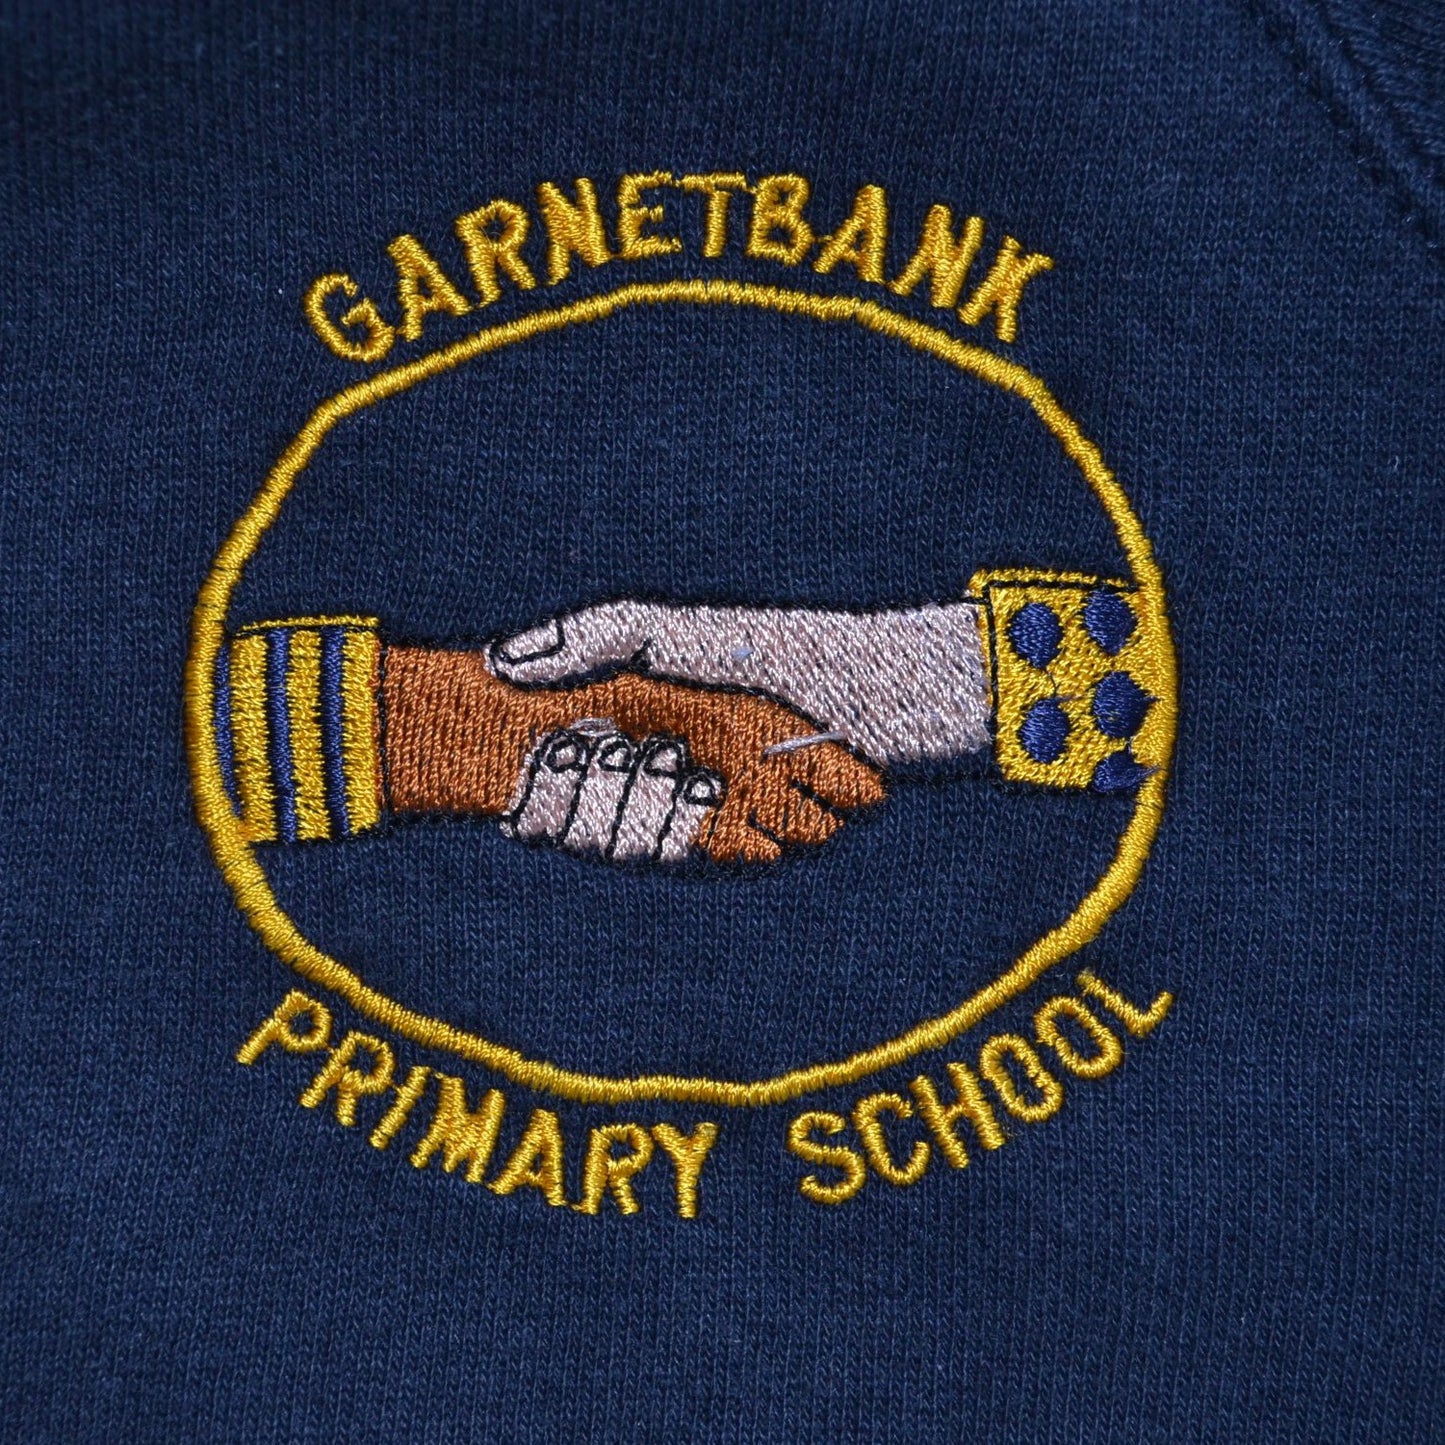 Garnetbank Primary Navy Blue Sweatshirt Crewneck